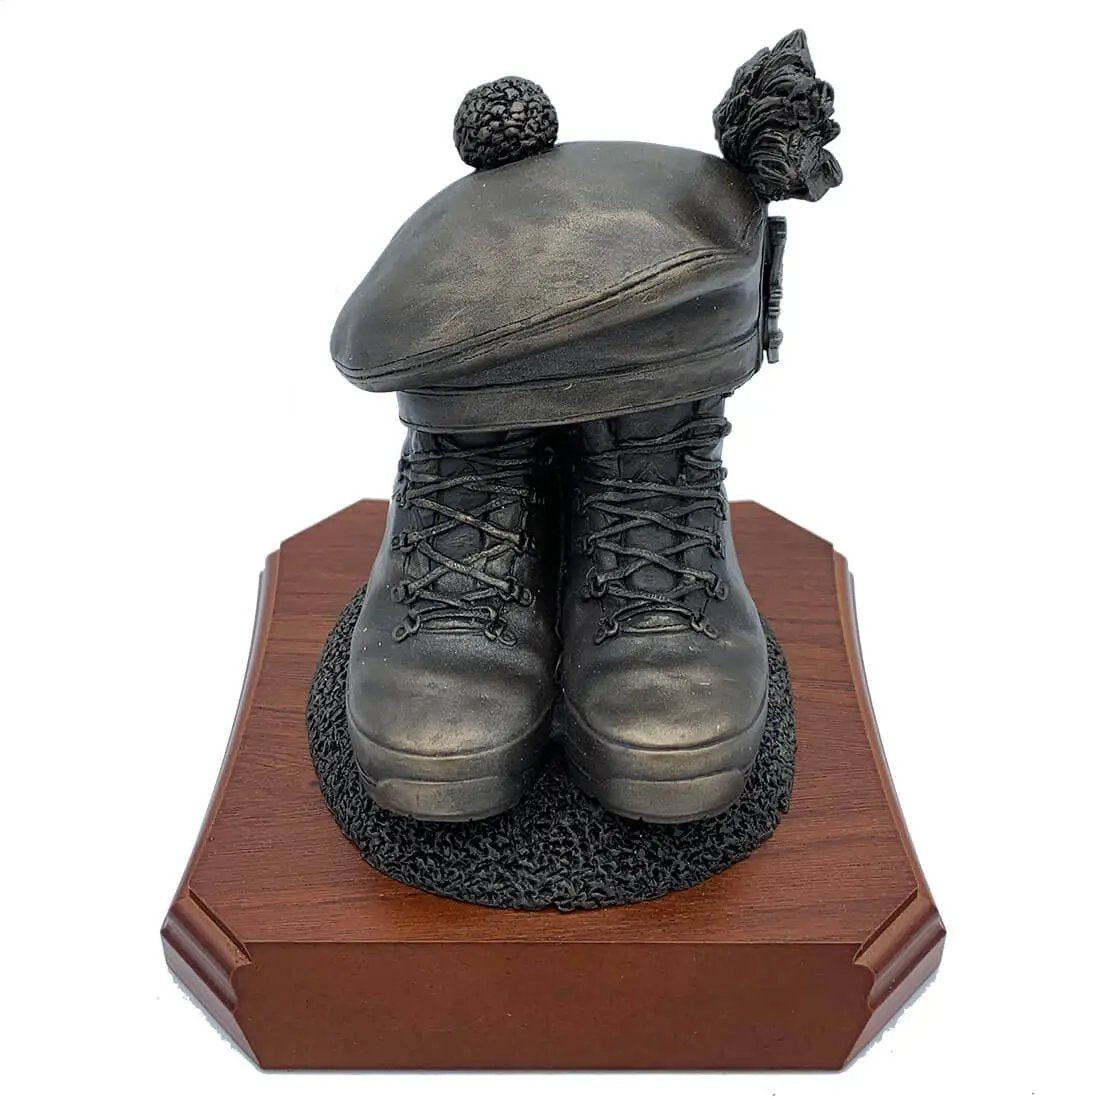 Boots and Tam O'Shanter Statue - John Bull Clothing